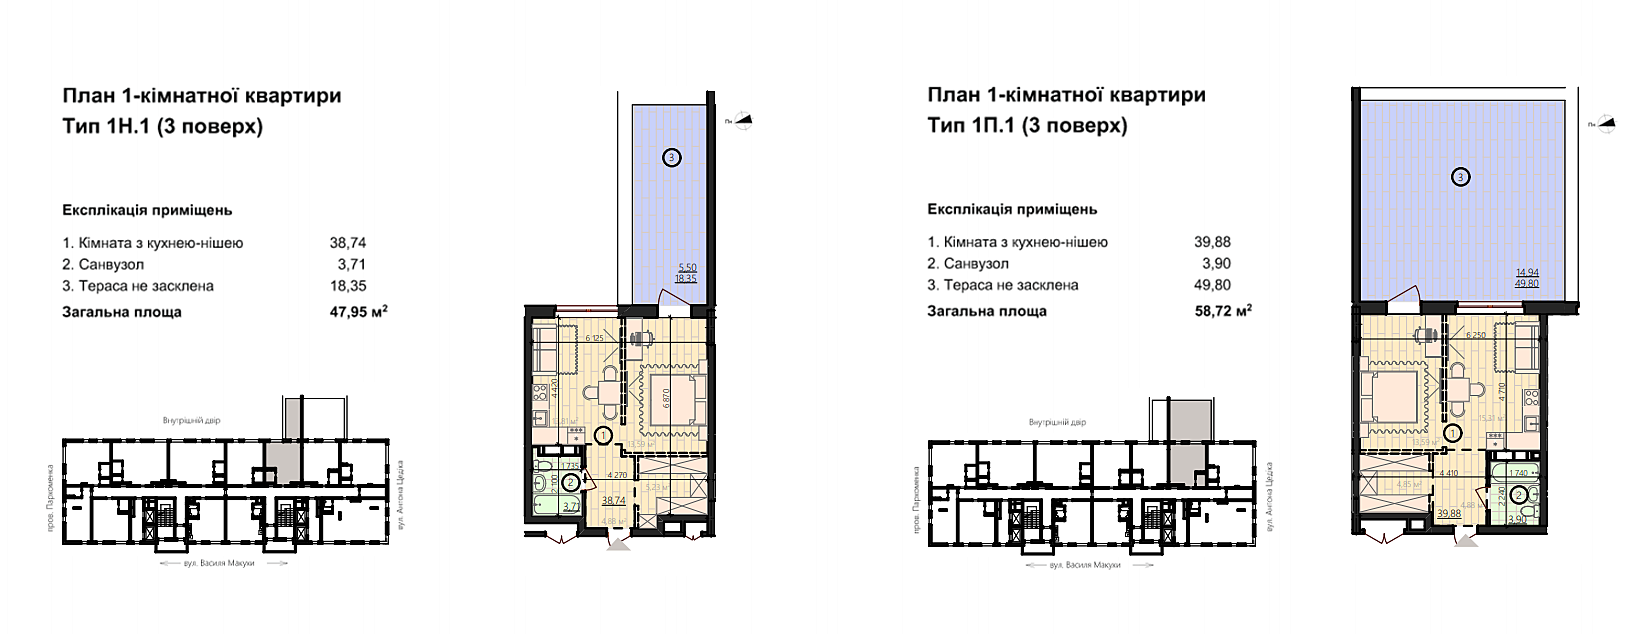 ЖК Урбанист планировки квартир с террасами